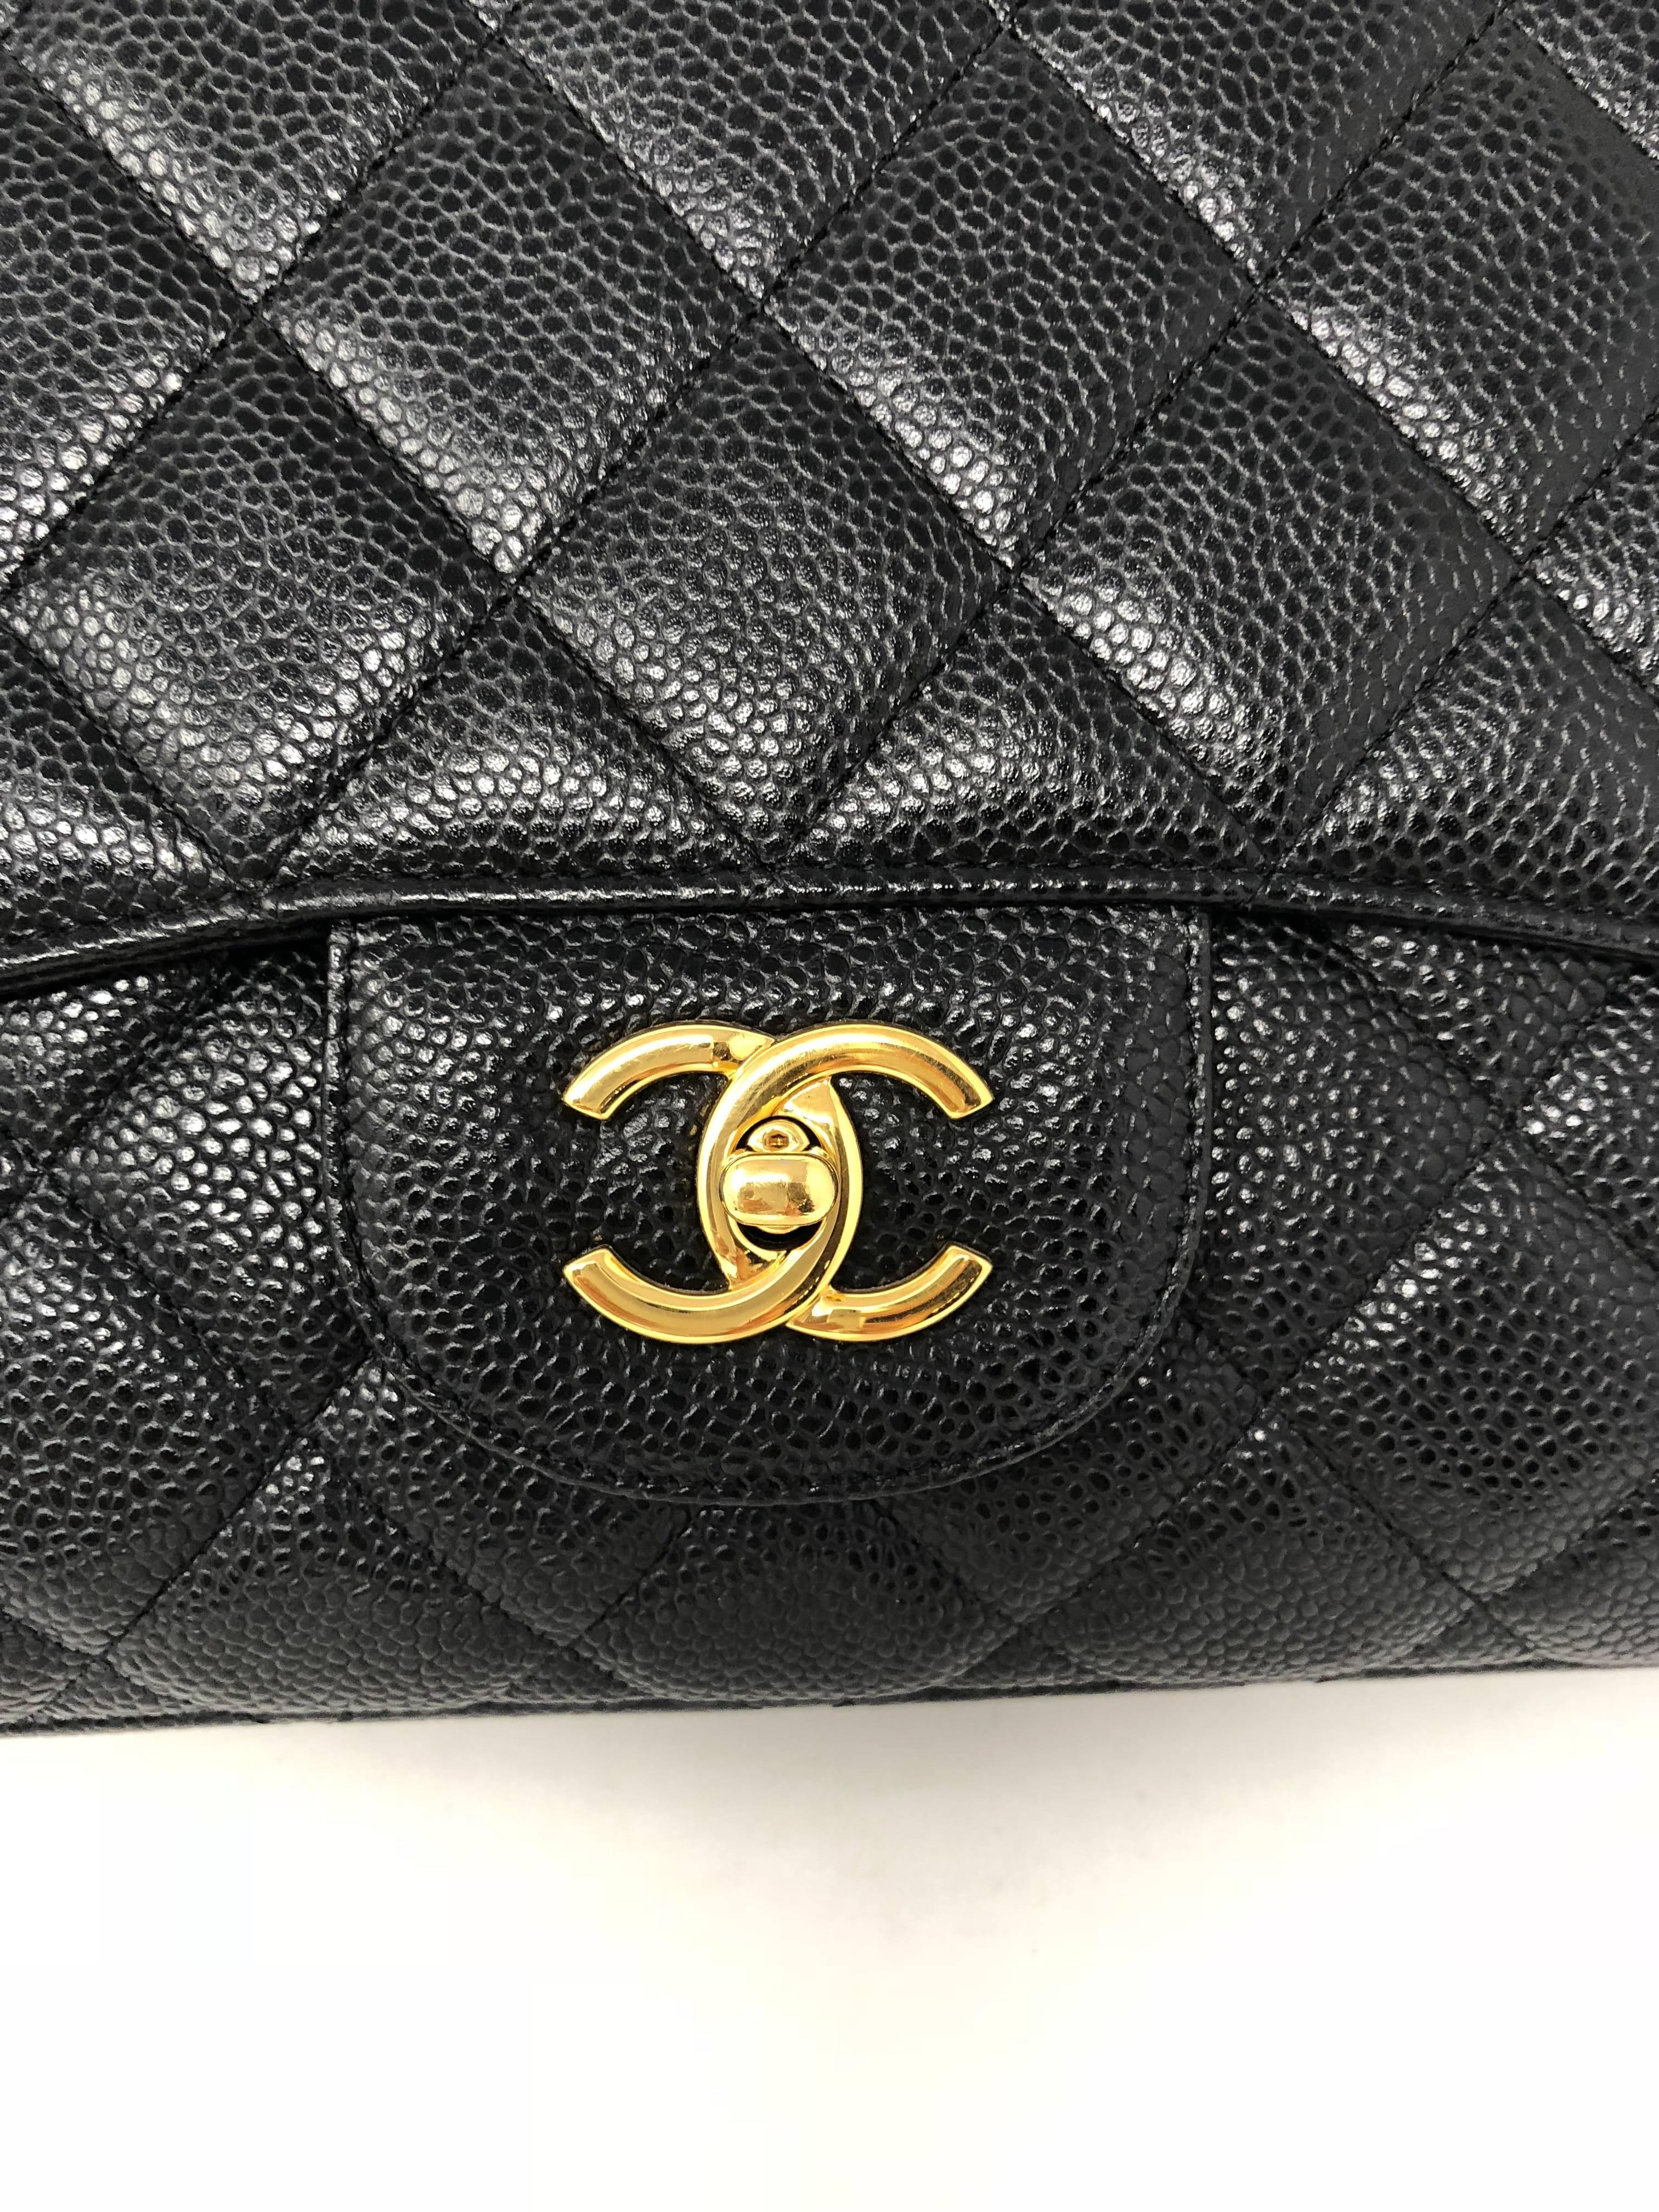 Chanel Black Caviar Leather Maxi Bag  5